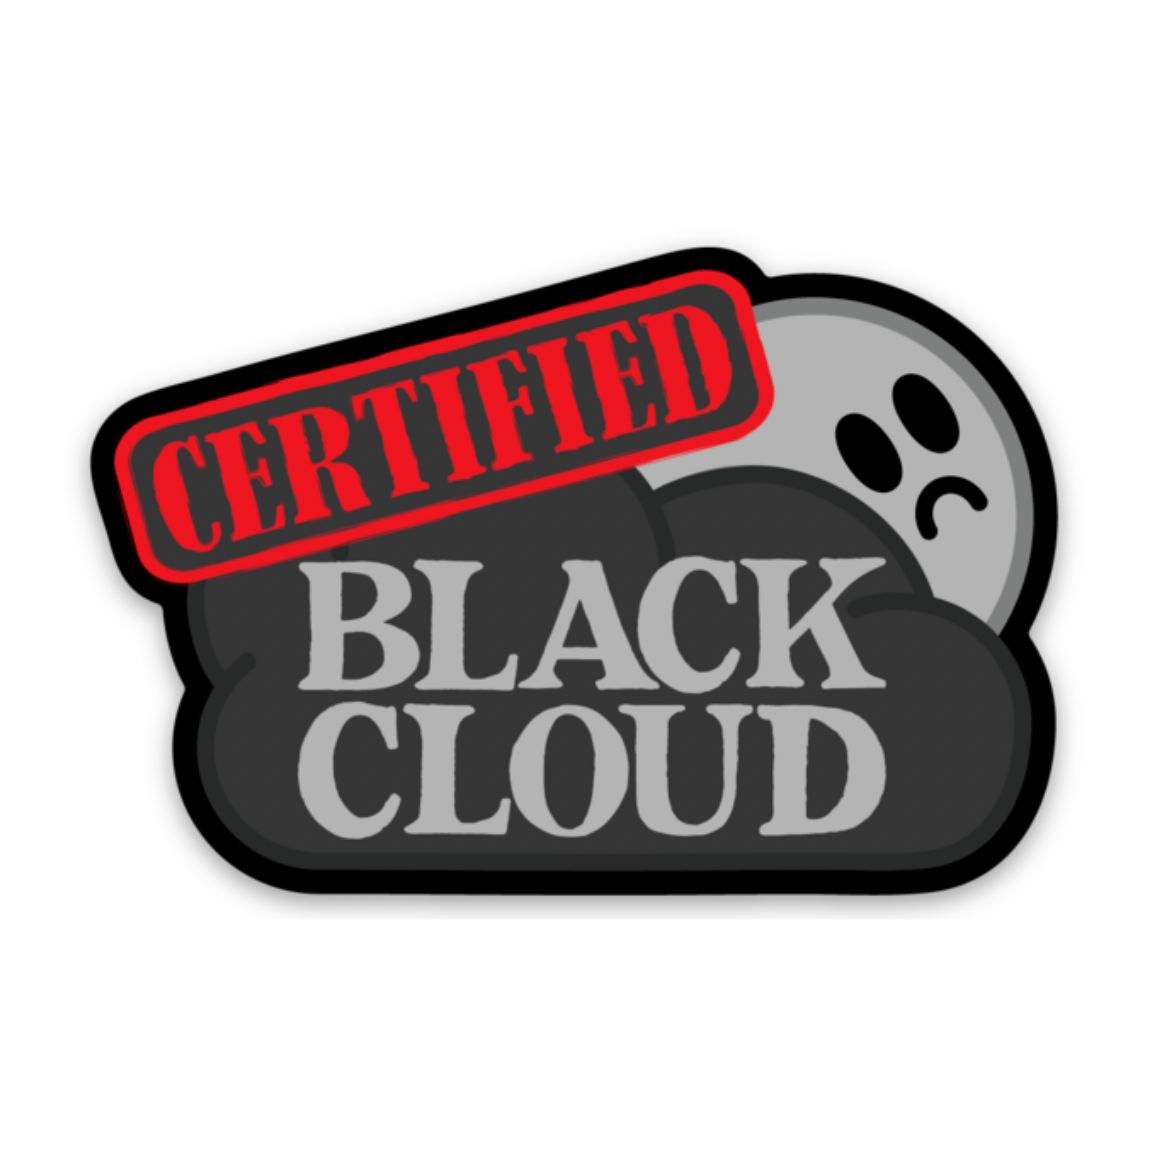 Certified Black Cloud Decal